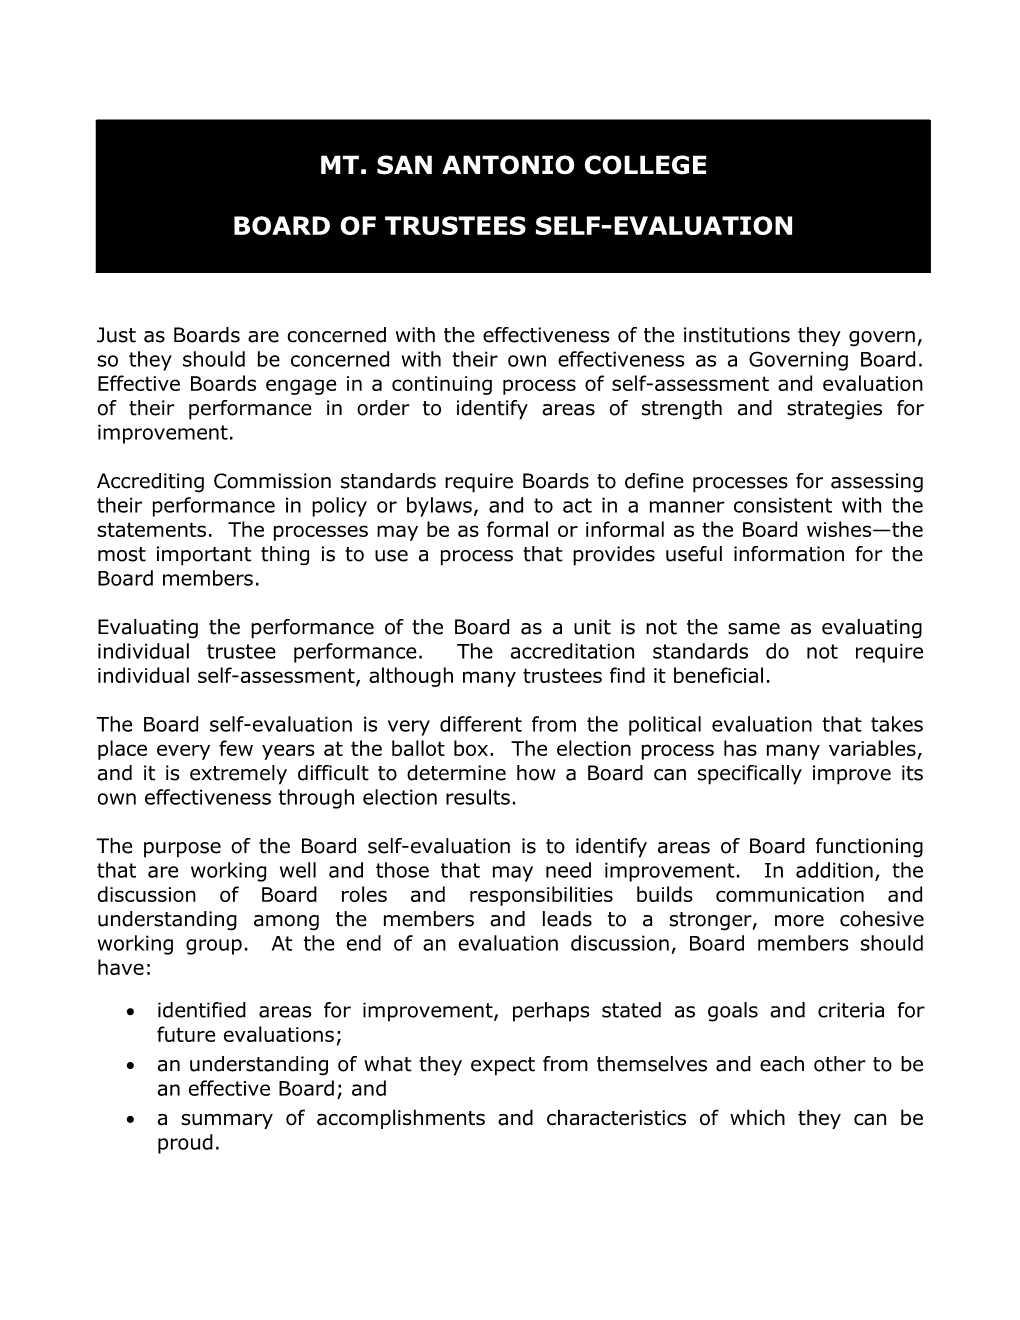 Board Self-Evaluation Instrumentpage 1